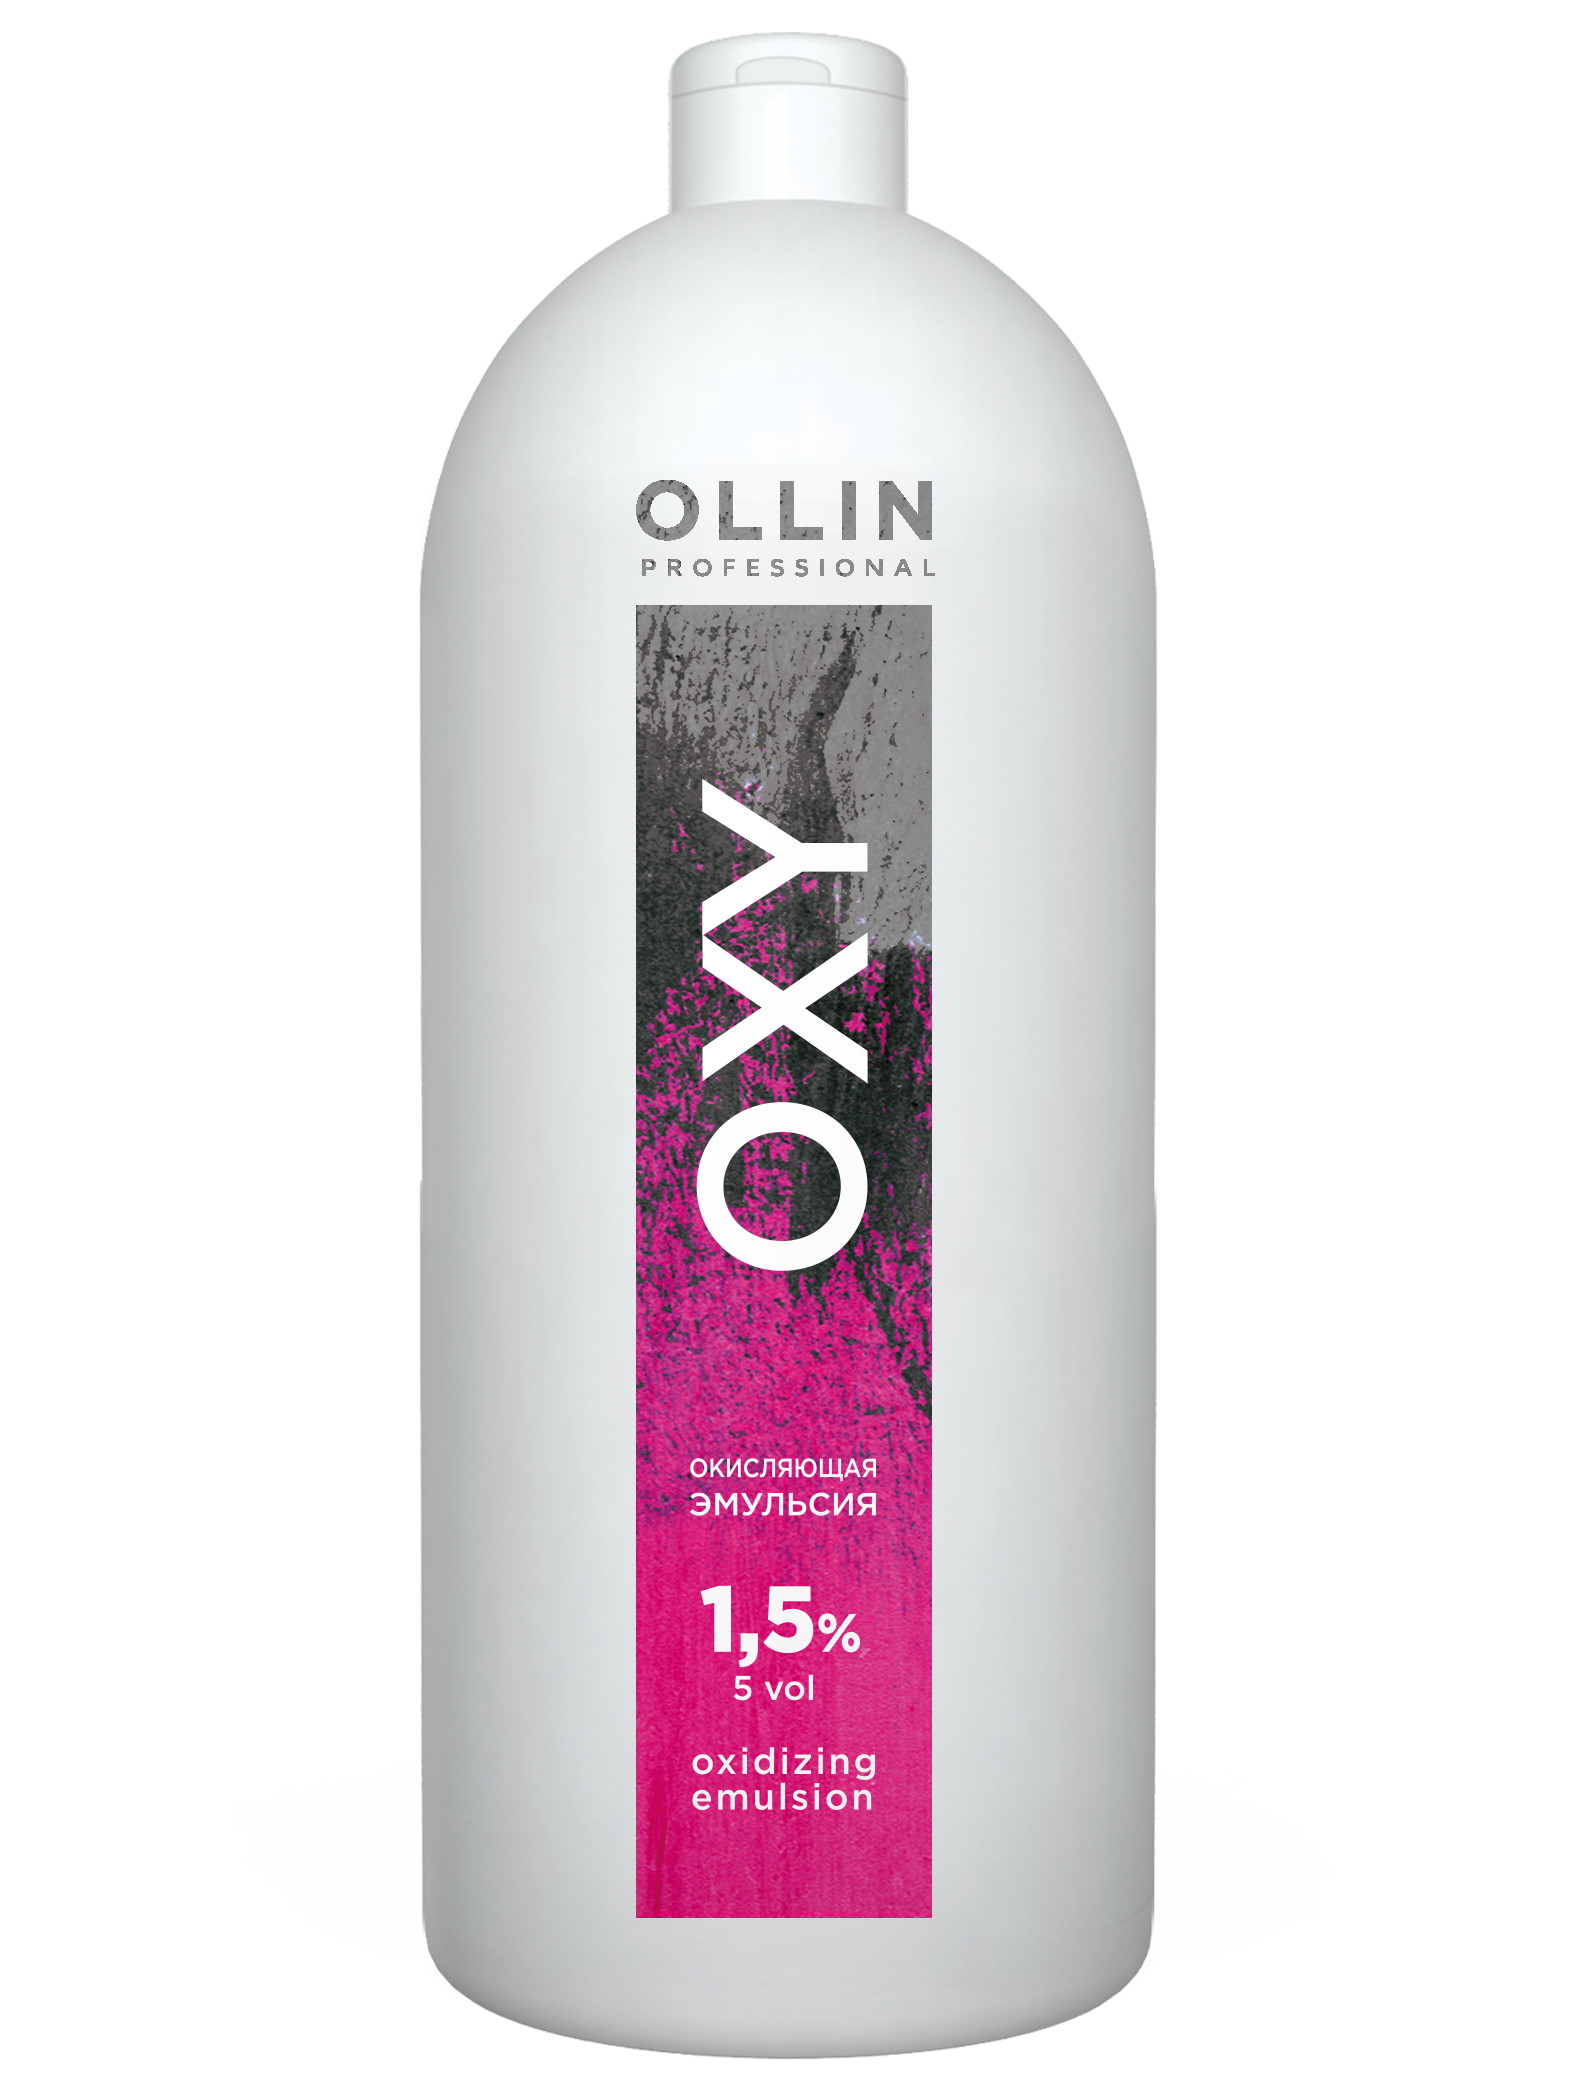 Проявитель Ollin Professional Oxy Oxidizing Emulsion 1,5% 5 vol 1000 мл проявитель ollin professional silk touch 9% 1000 мл